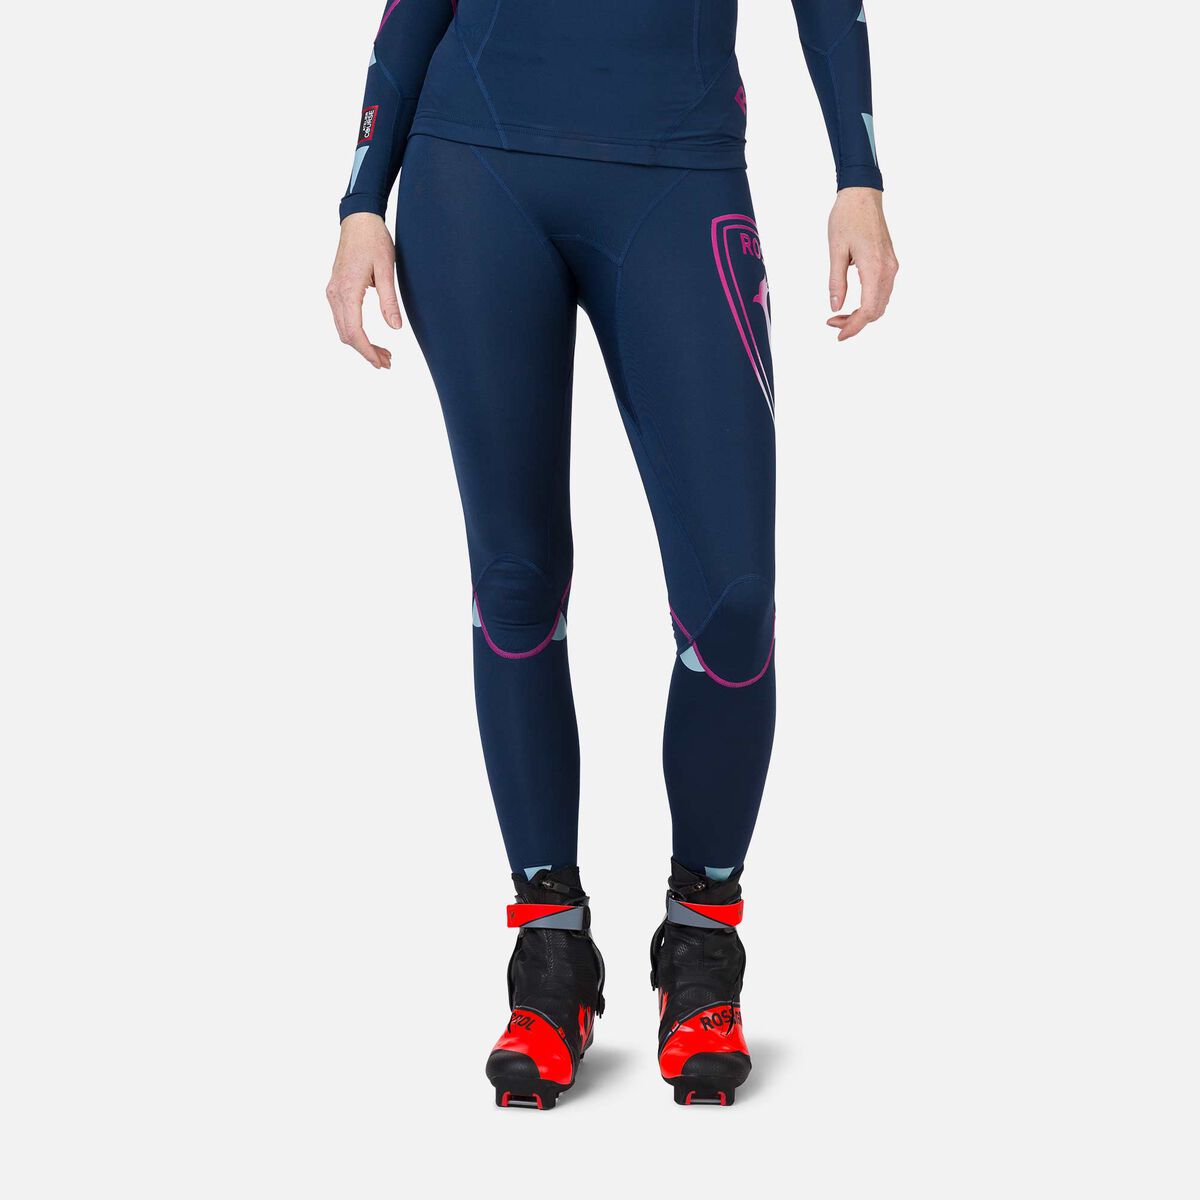 ROSSIGNOL-INFINI COMPRESSION RACE TIGHTS BLACK - Cross-country ski leggings